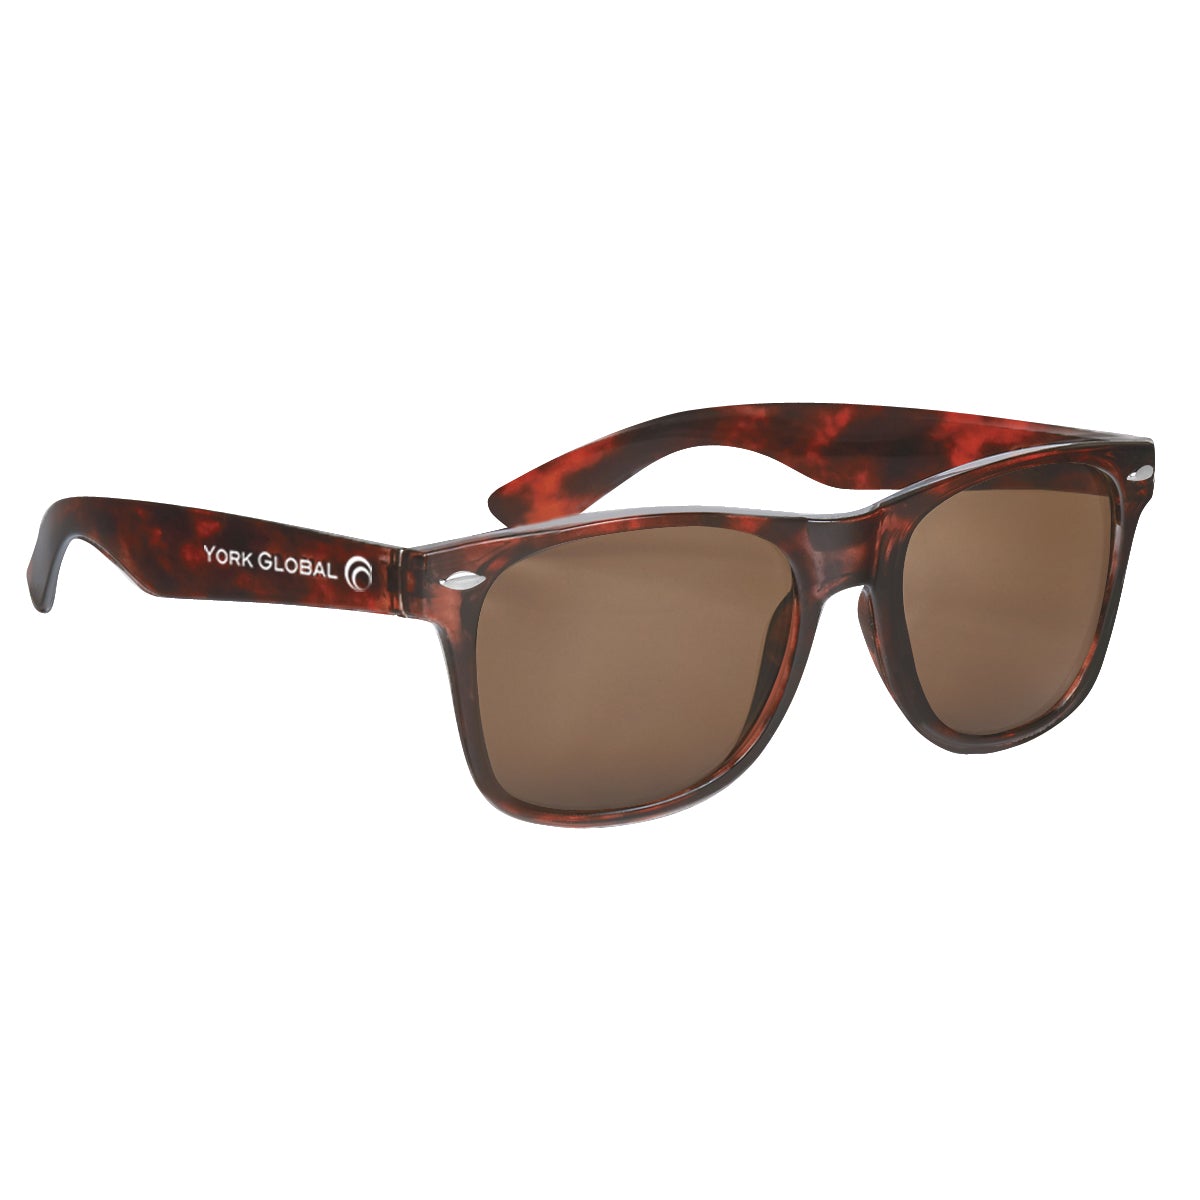 Malibu Sunglasses Sunglasses Hit Promo Tortoise Single Color 